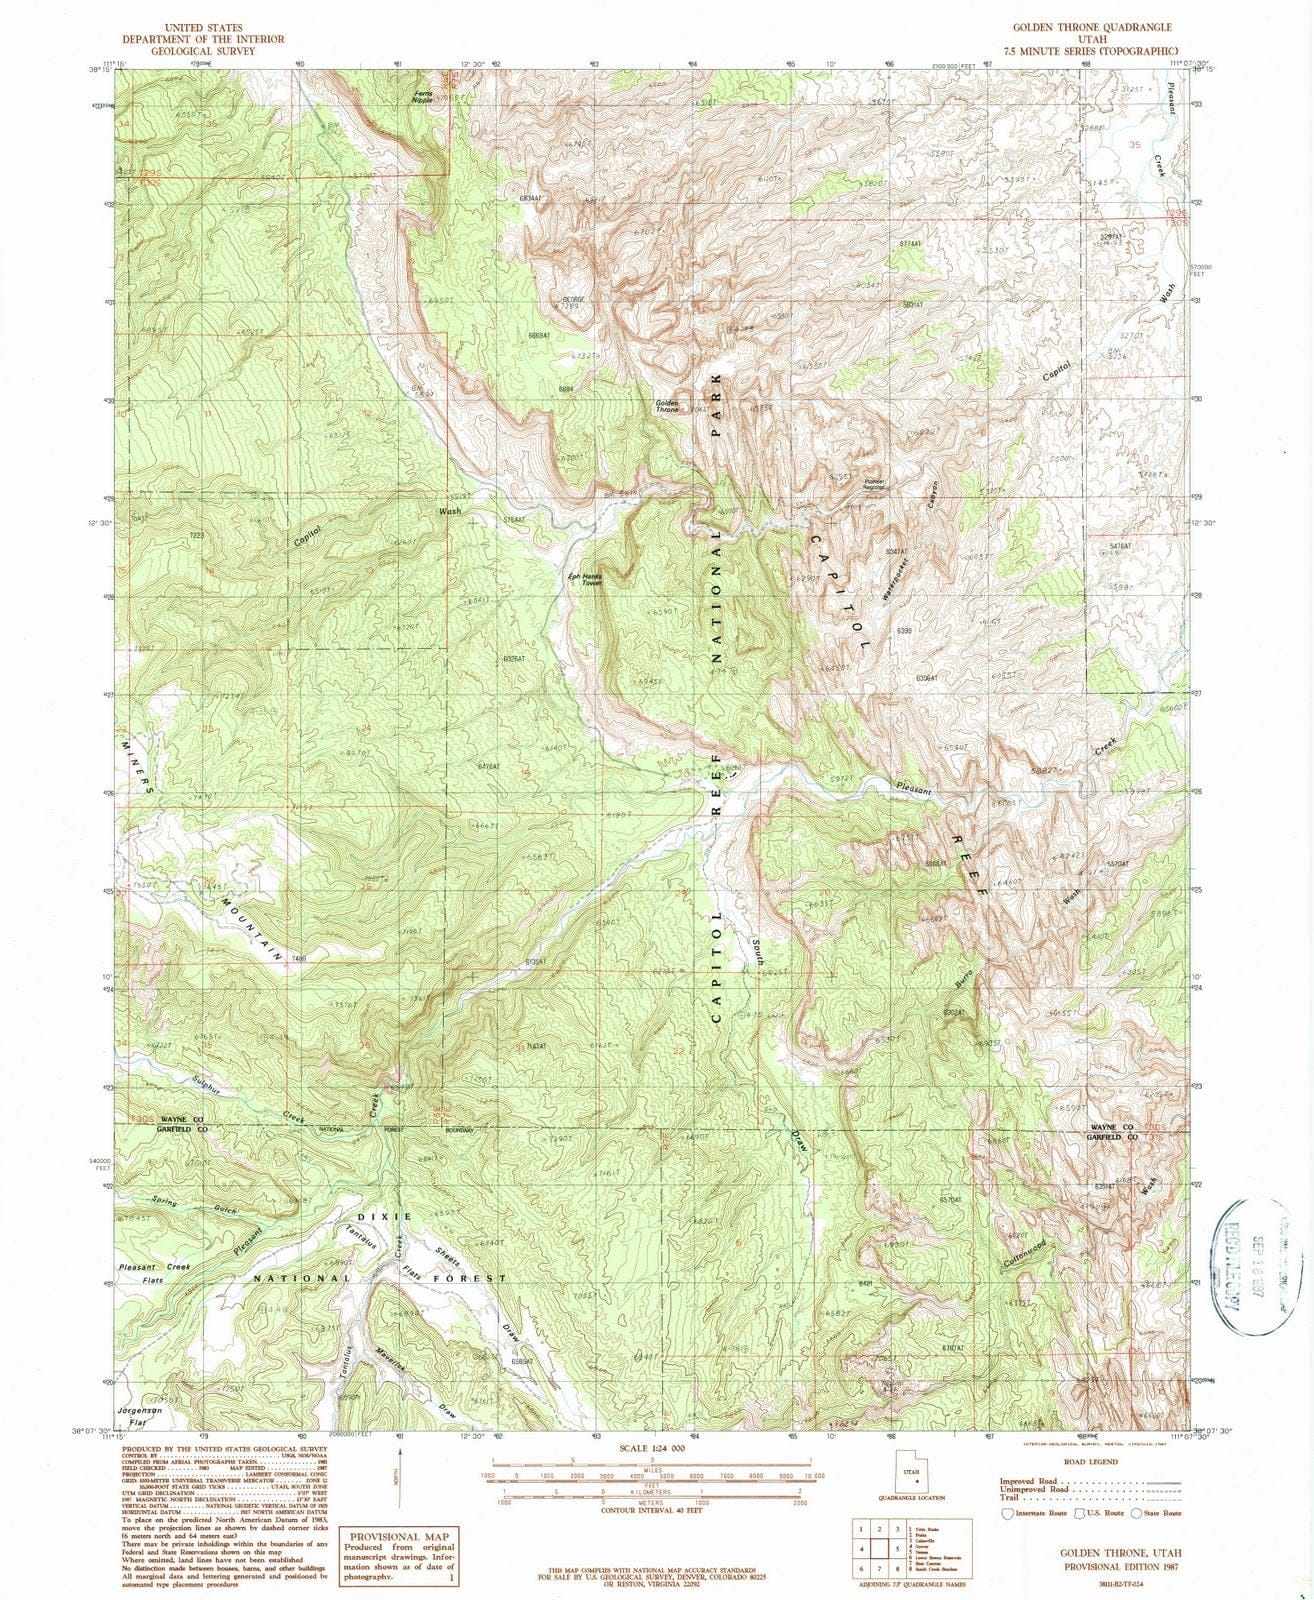 1987 Golden Throne, UT - Utah - USGS Topographic Map